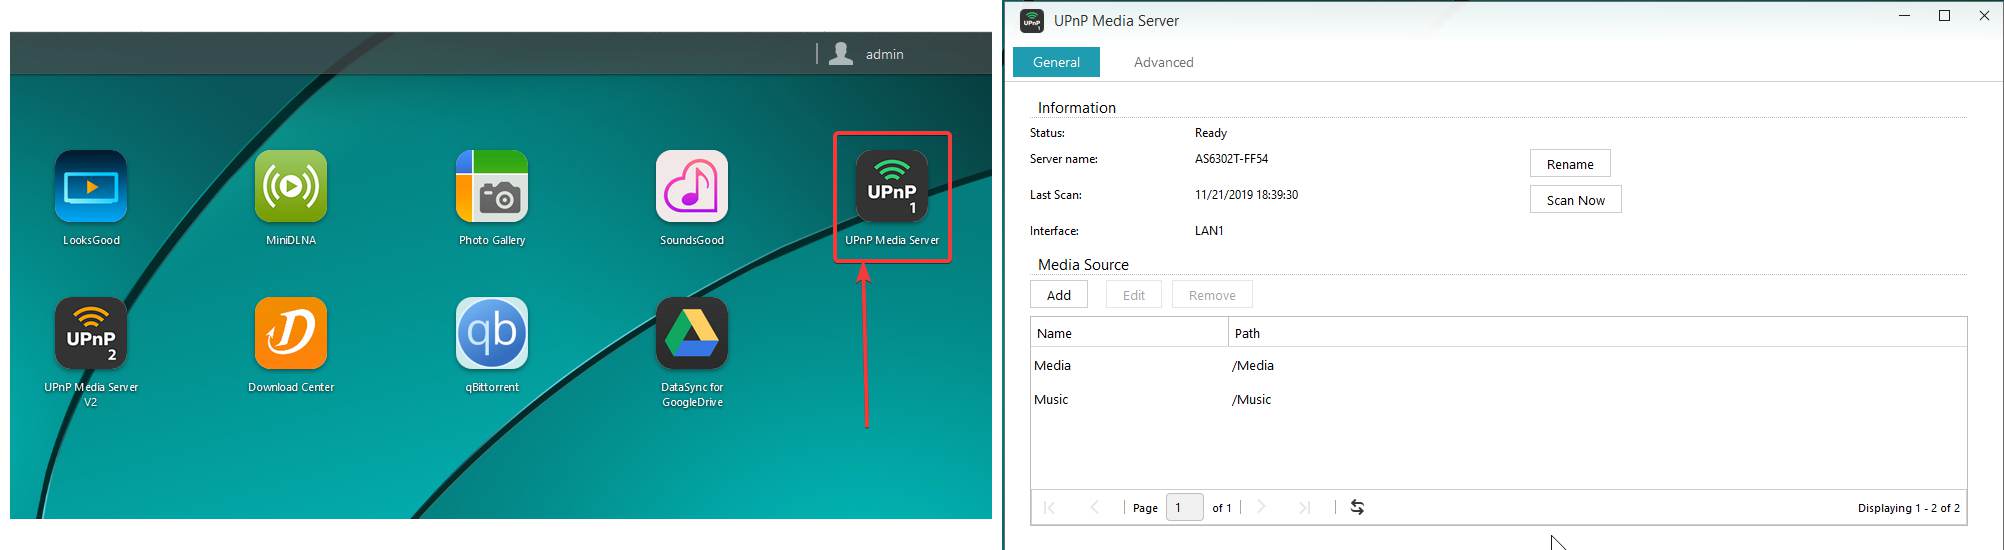 UPnP Media Server